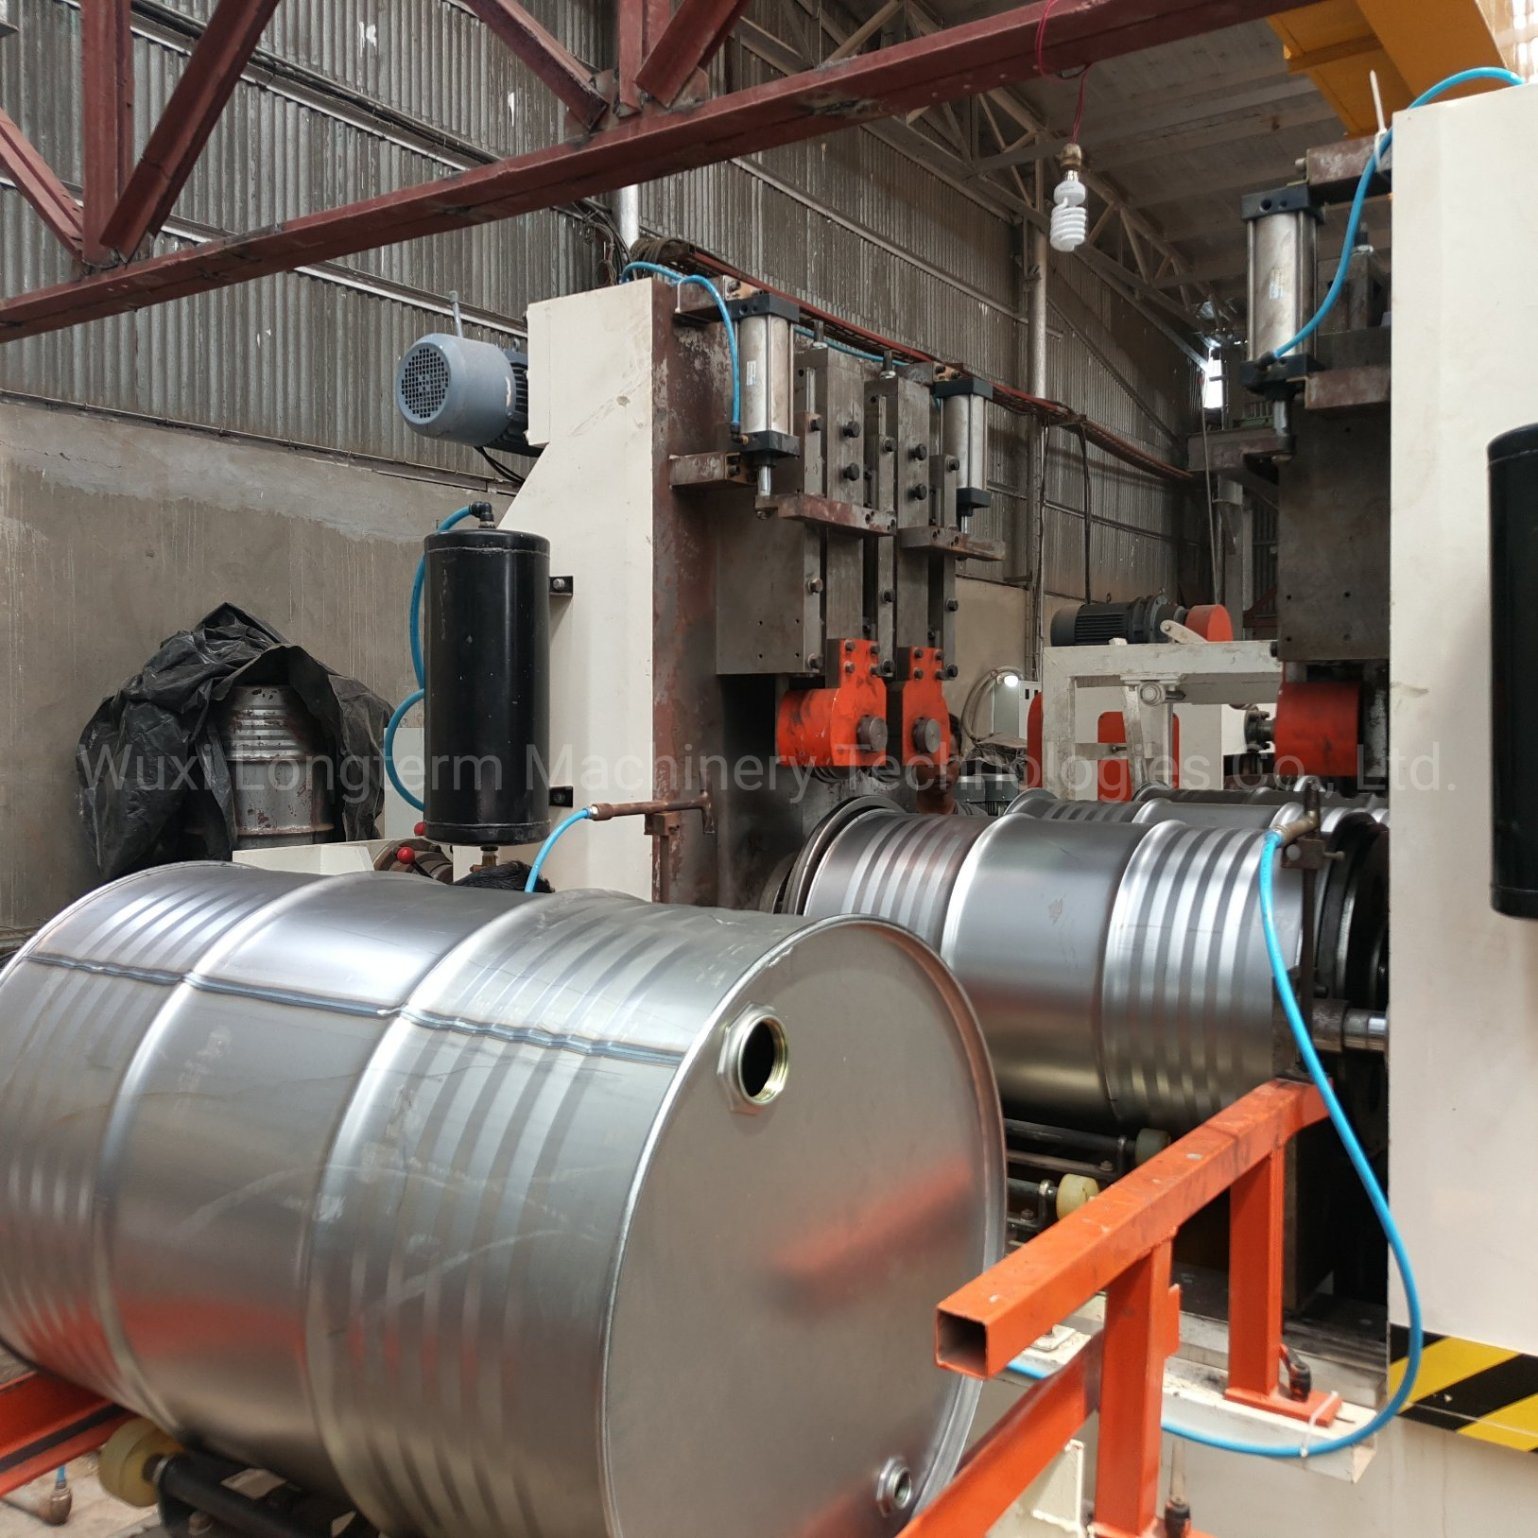 W Corrugation Machine for Steel Drum Making Machine 208L or Drum Manufacturing Equipment or Steel Drum Production Line